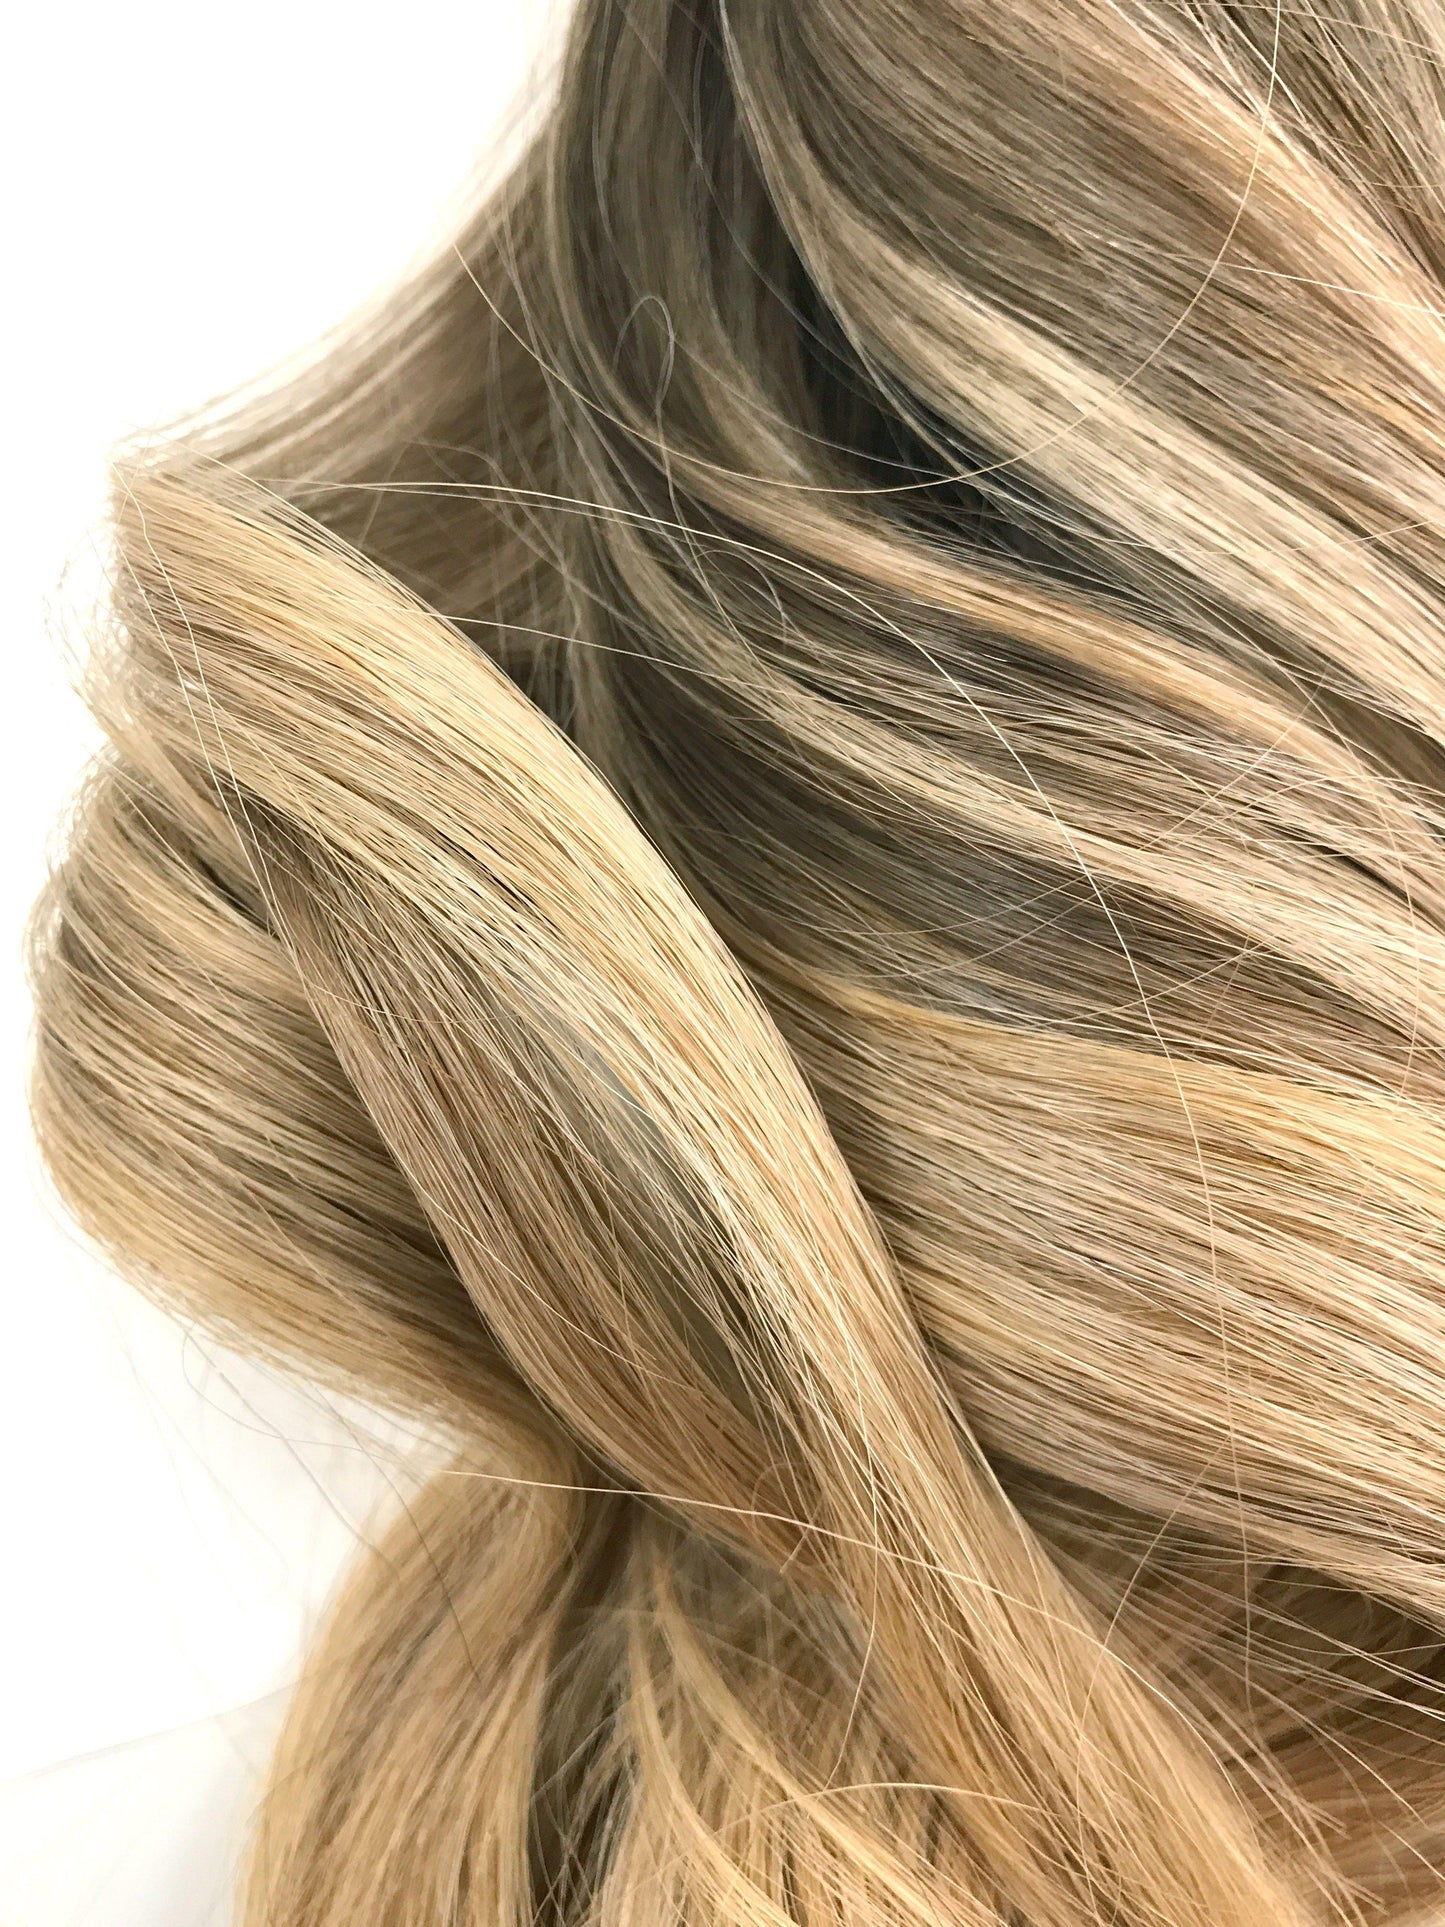 Europäische Balayage-Ombre-Haarverlängerungen – Virgin Hair & Beauty, die besten Haarverlängerungen, echtes reines Echthaar.